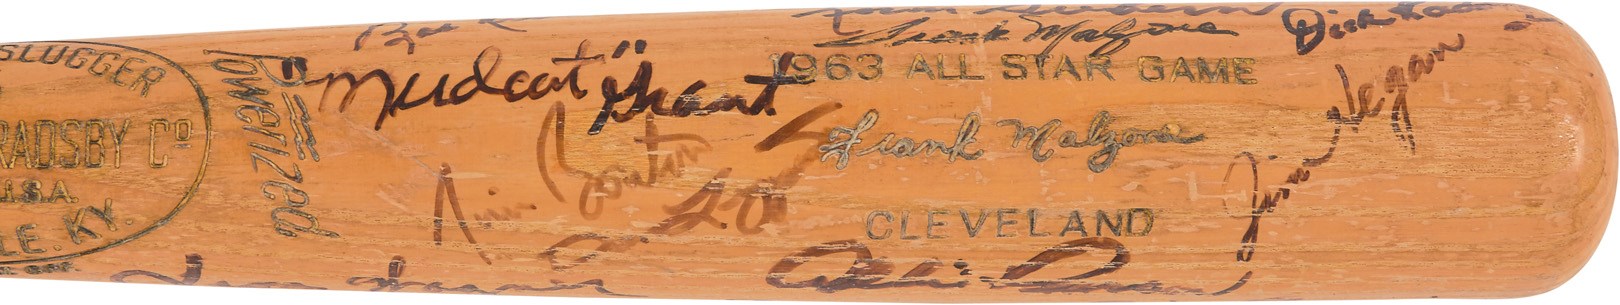 1963 Frank Malzone All-Star Game Team-Signed Bat (JSA)